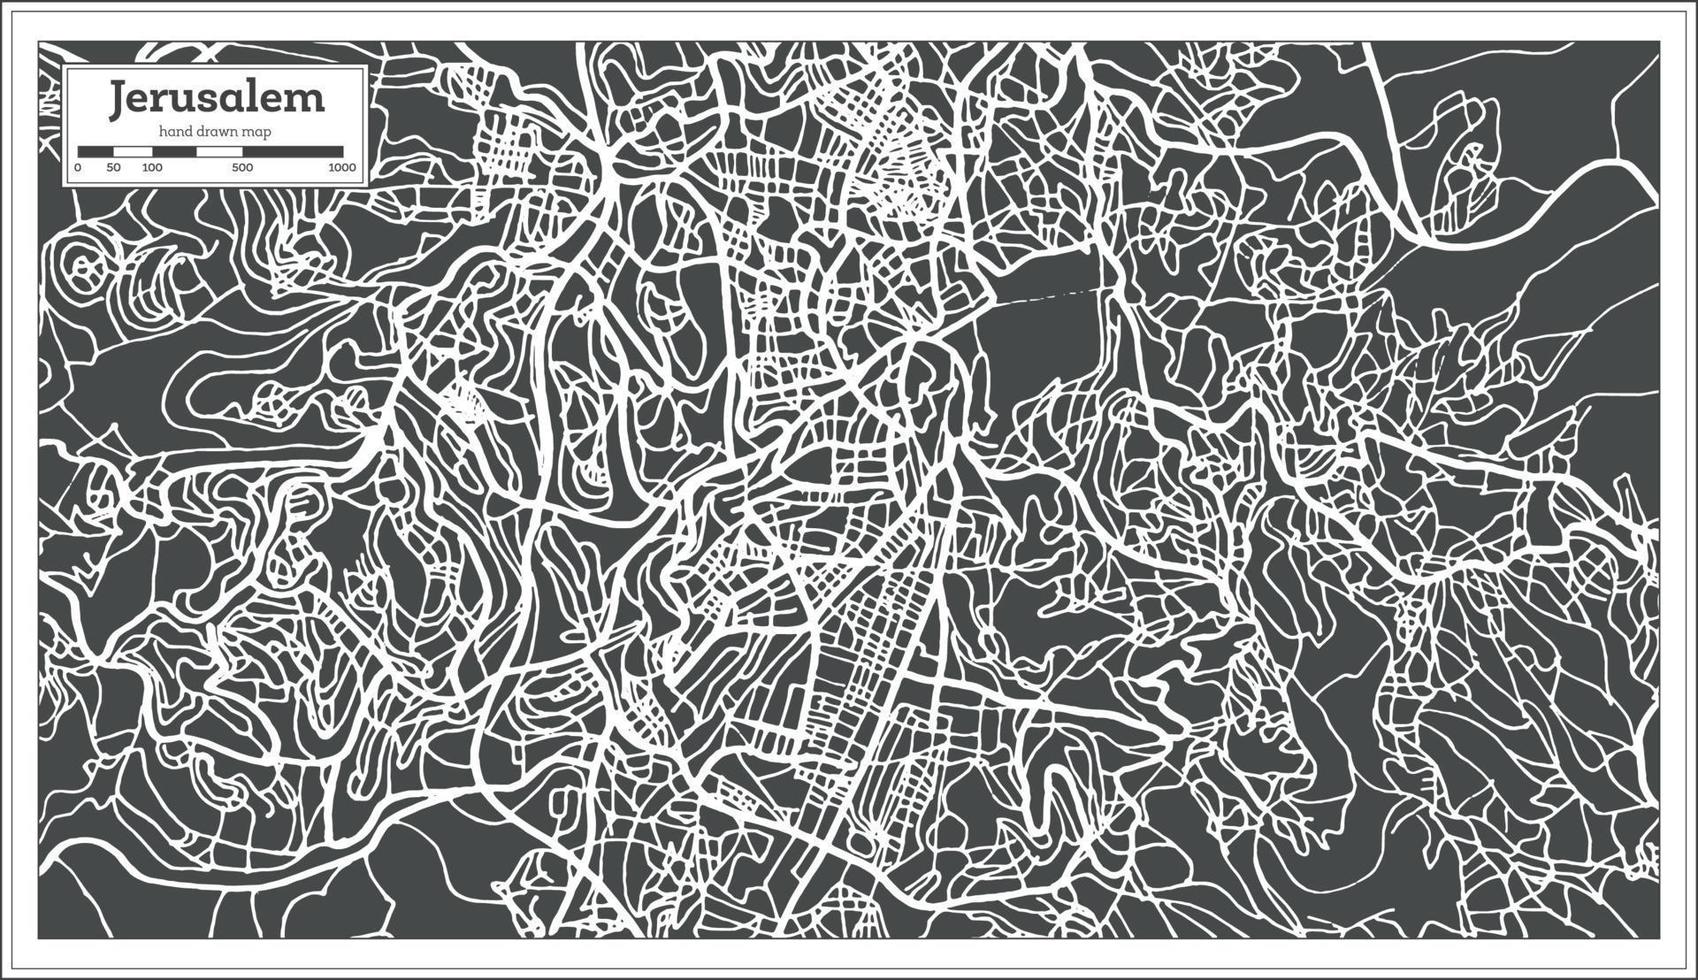 Jeruzalem Israël stad kaart in retro stijl. vector